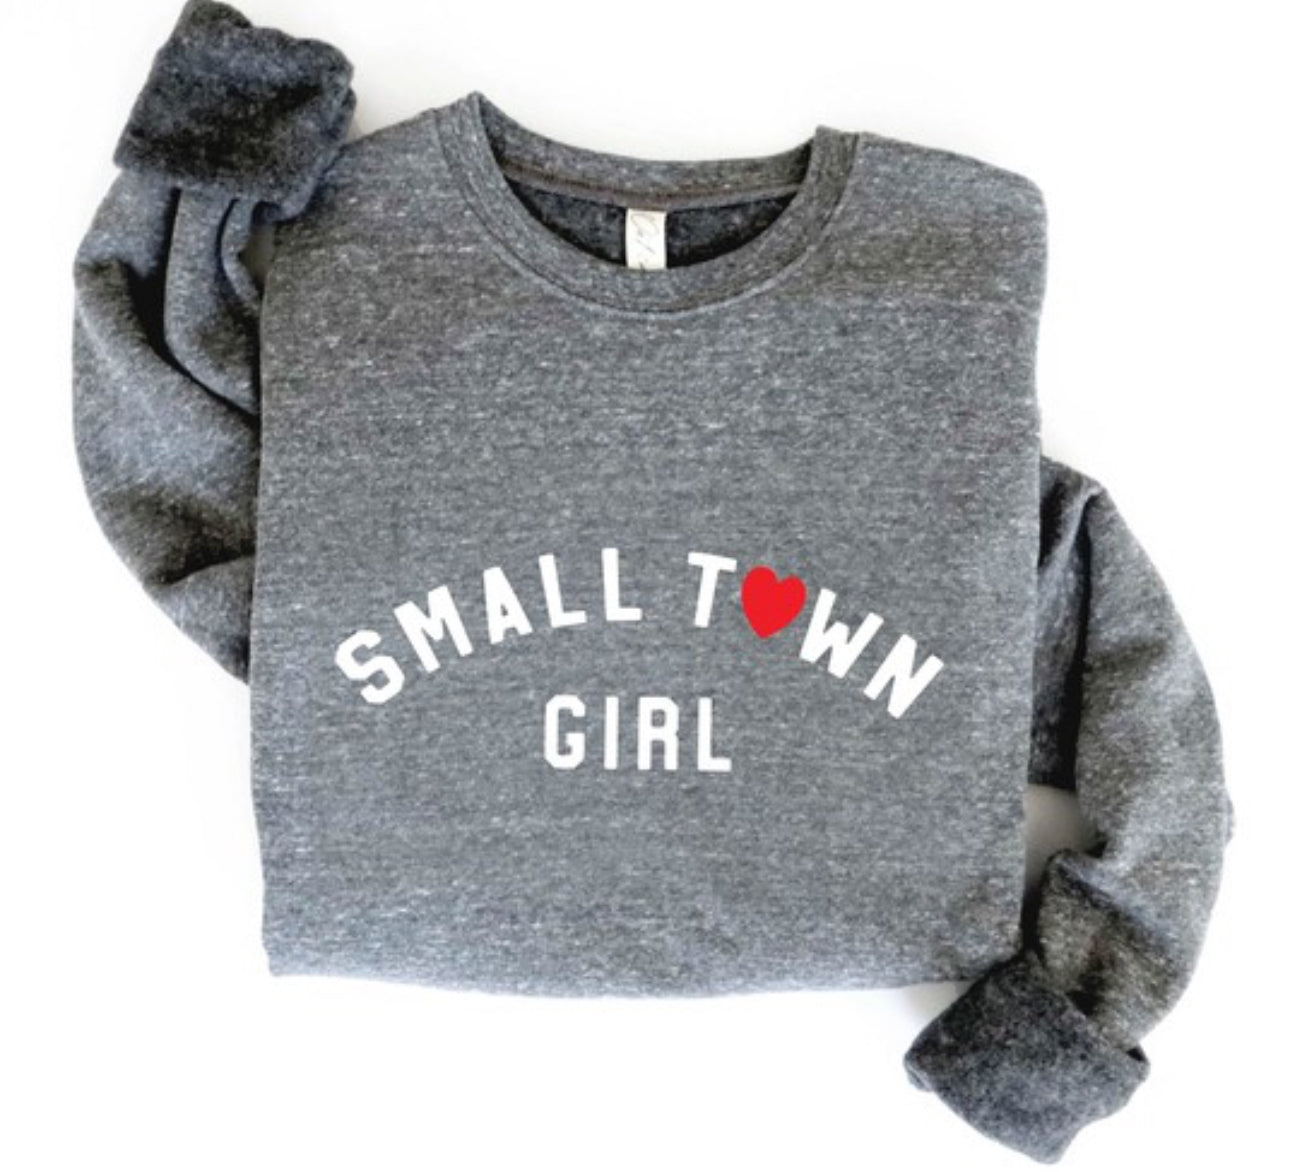 Small Town Girl Graphic Sweatshirt